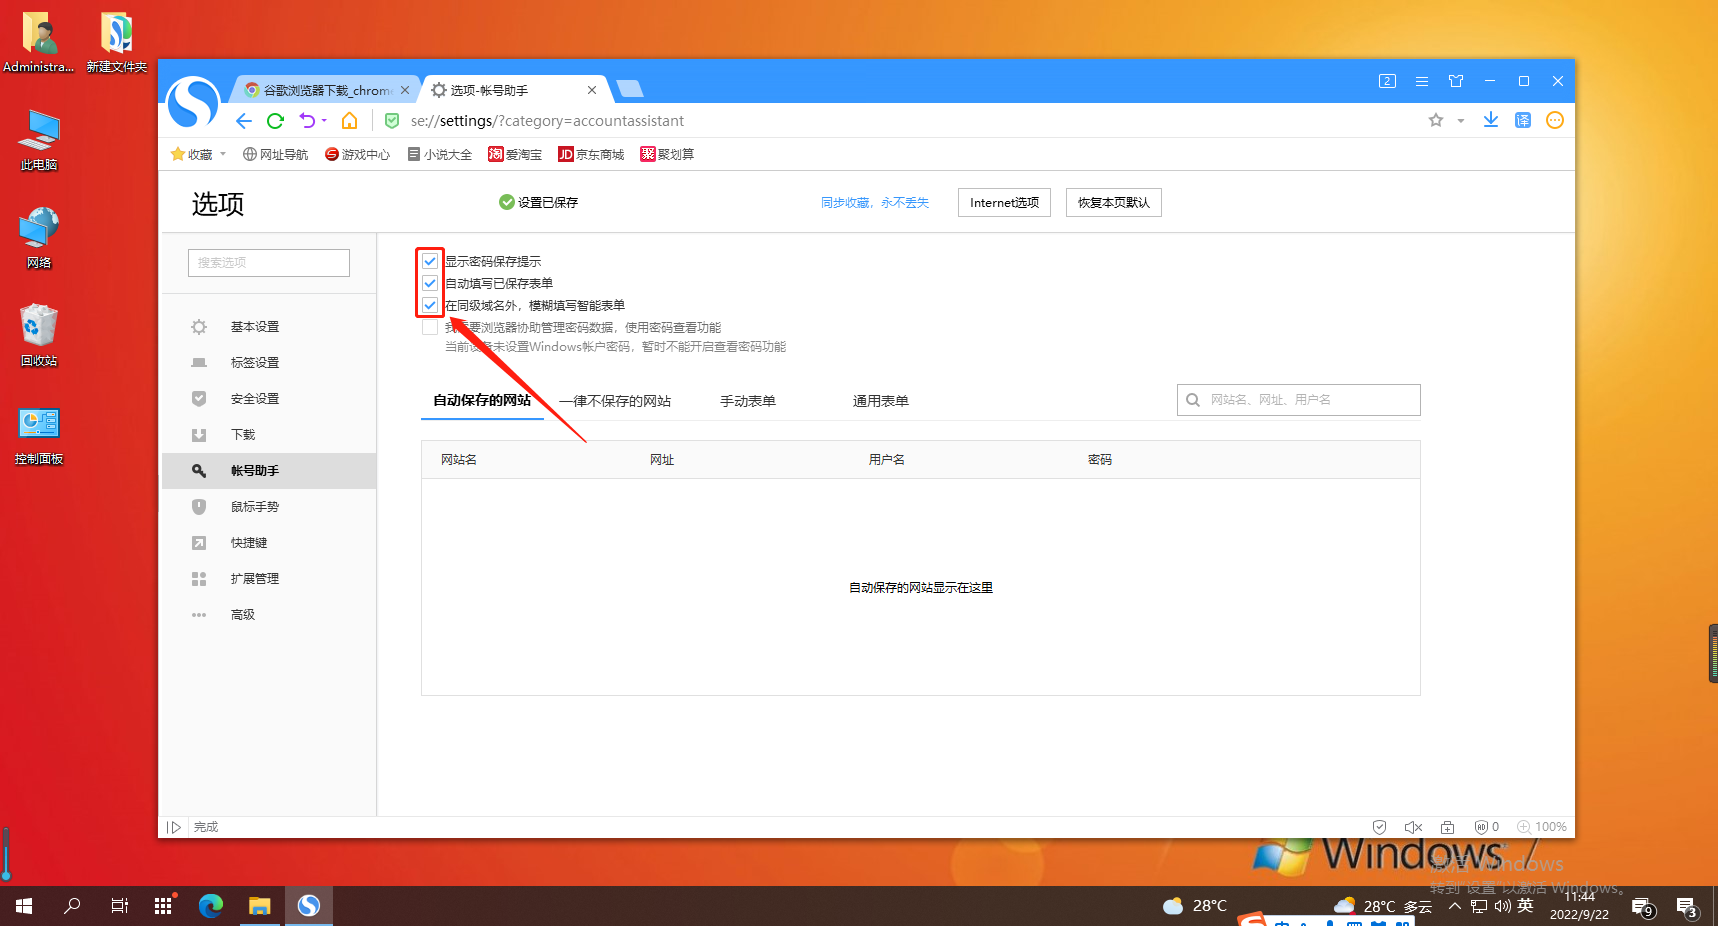 Sogou Browser のスマート フォーム入力機能を有効にするにはどうすればよいですか?